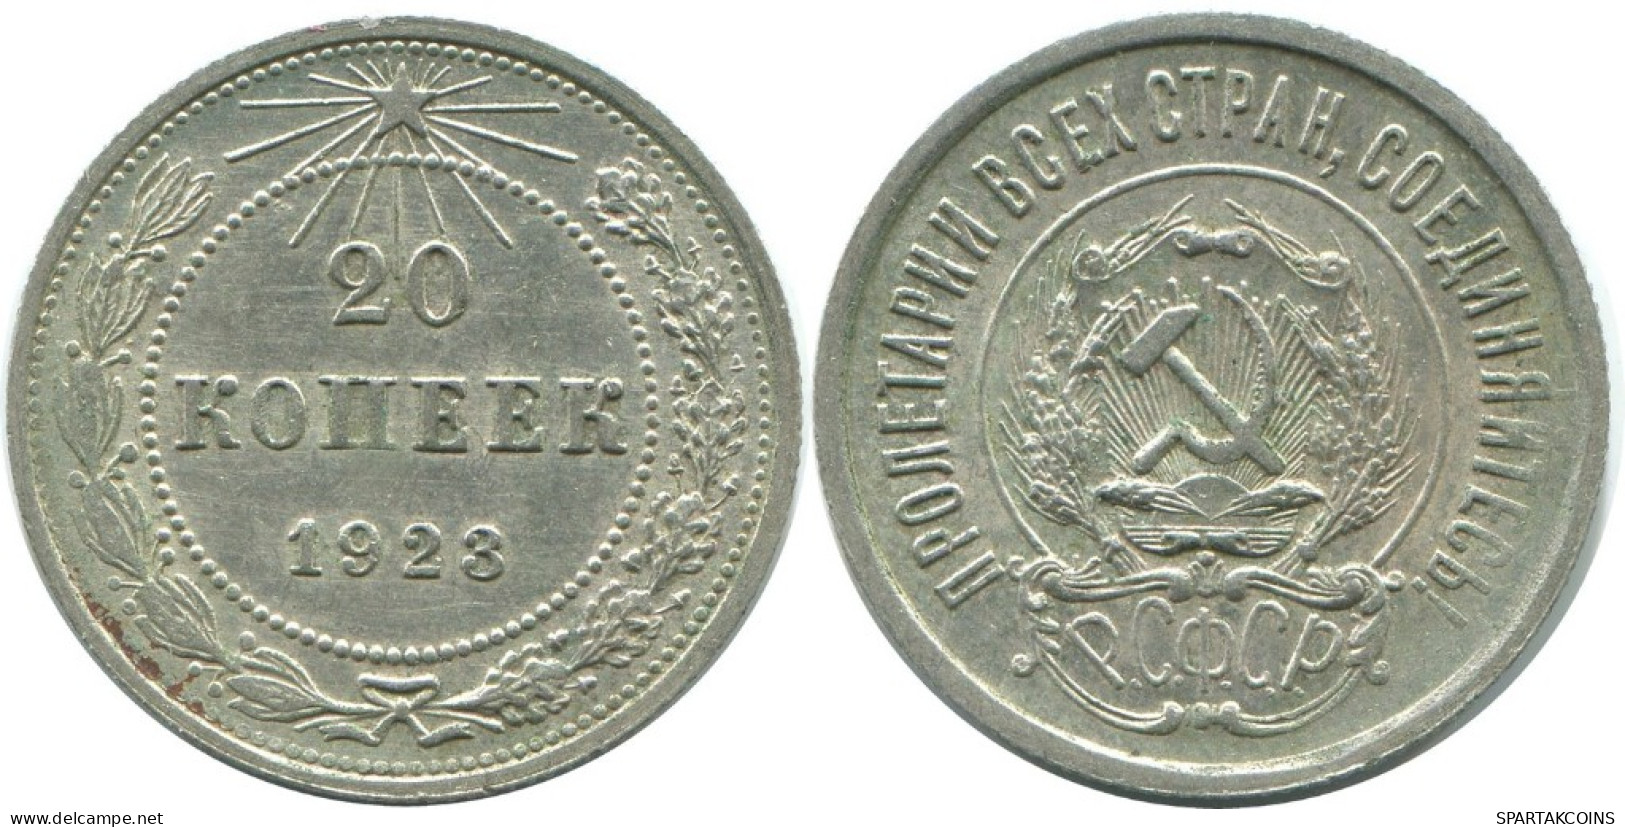 20 KOPEKS 1923 RUSSLAND RUSSIA RSFSR SILBER Münze HIGH GRADE #AF679.D.A - Russie